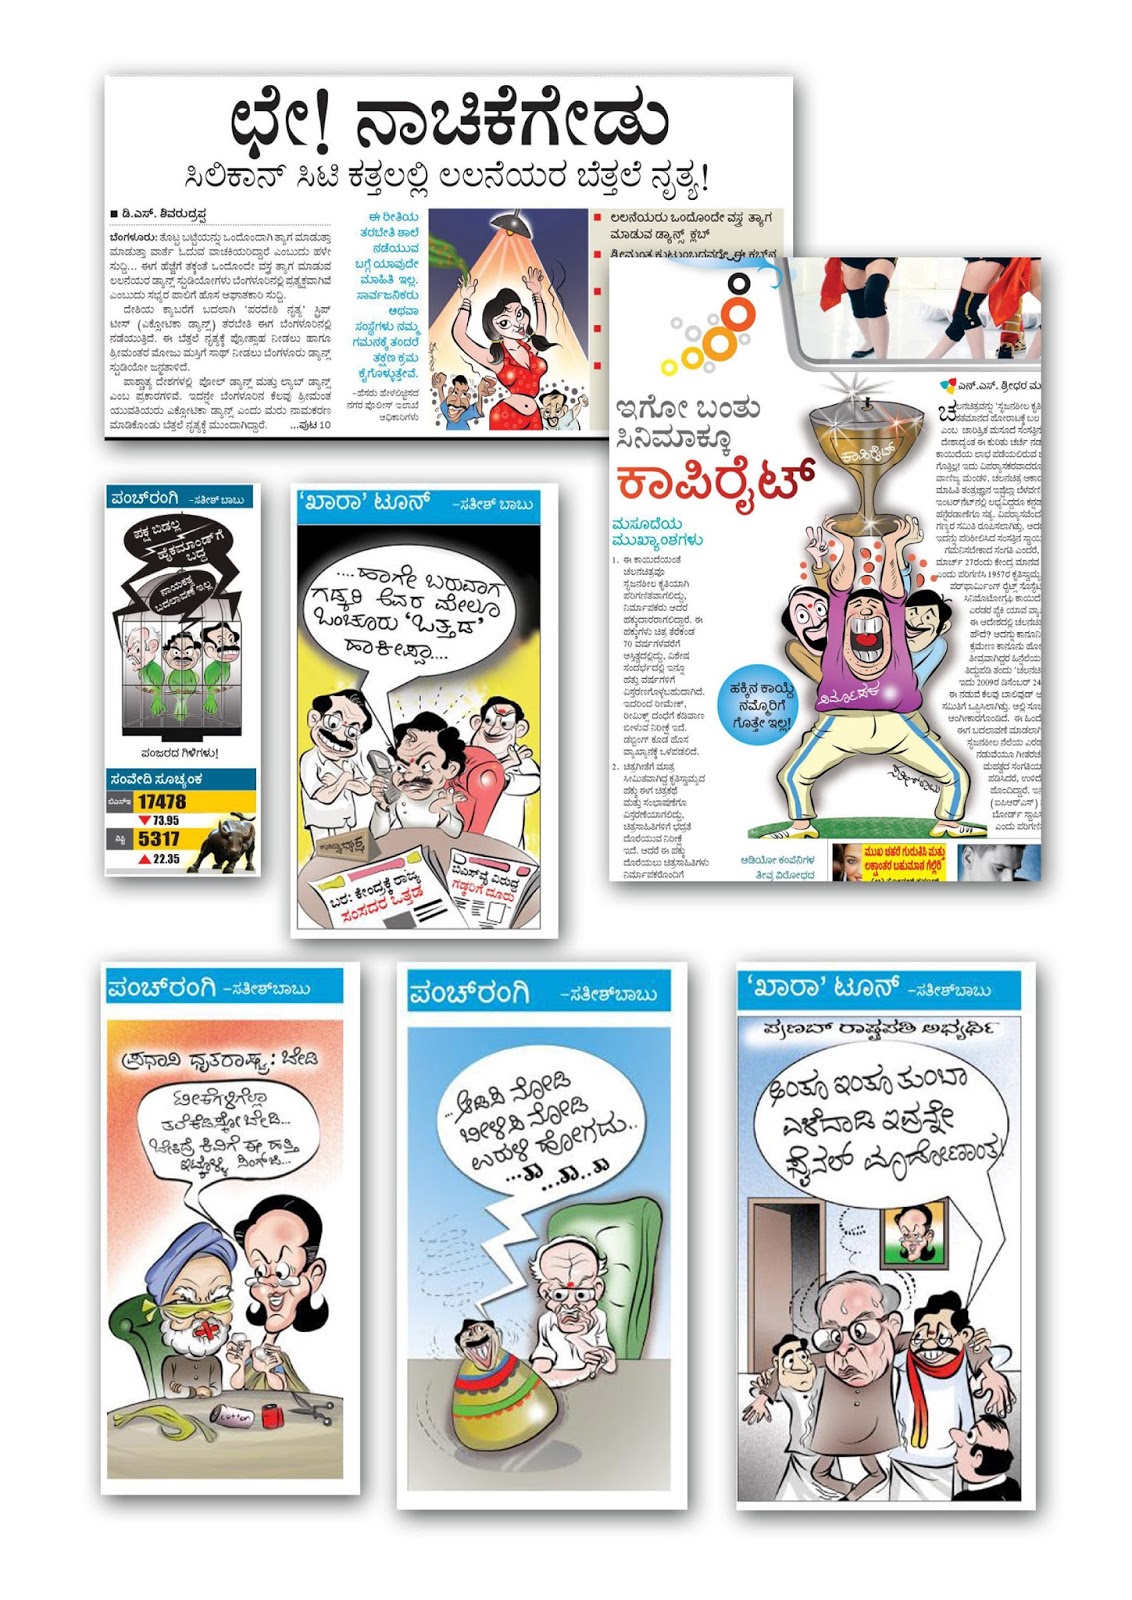 SATISH CARTOONS: vijayavani published cartoons